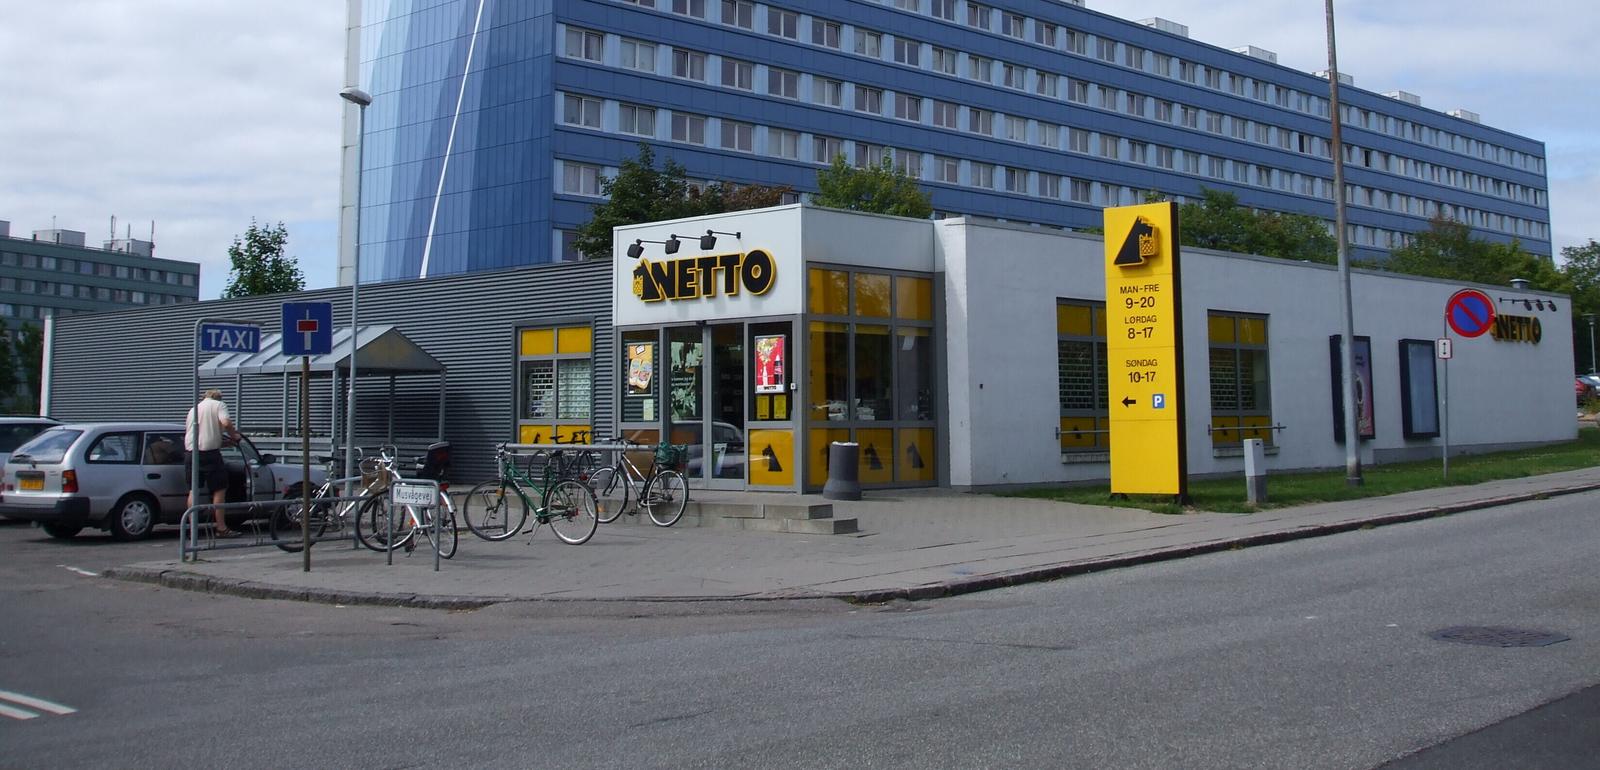 Netto supermarket in Denmark